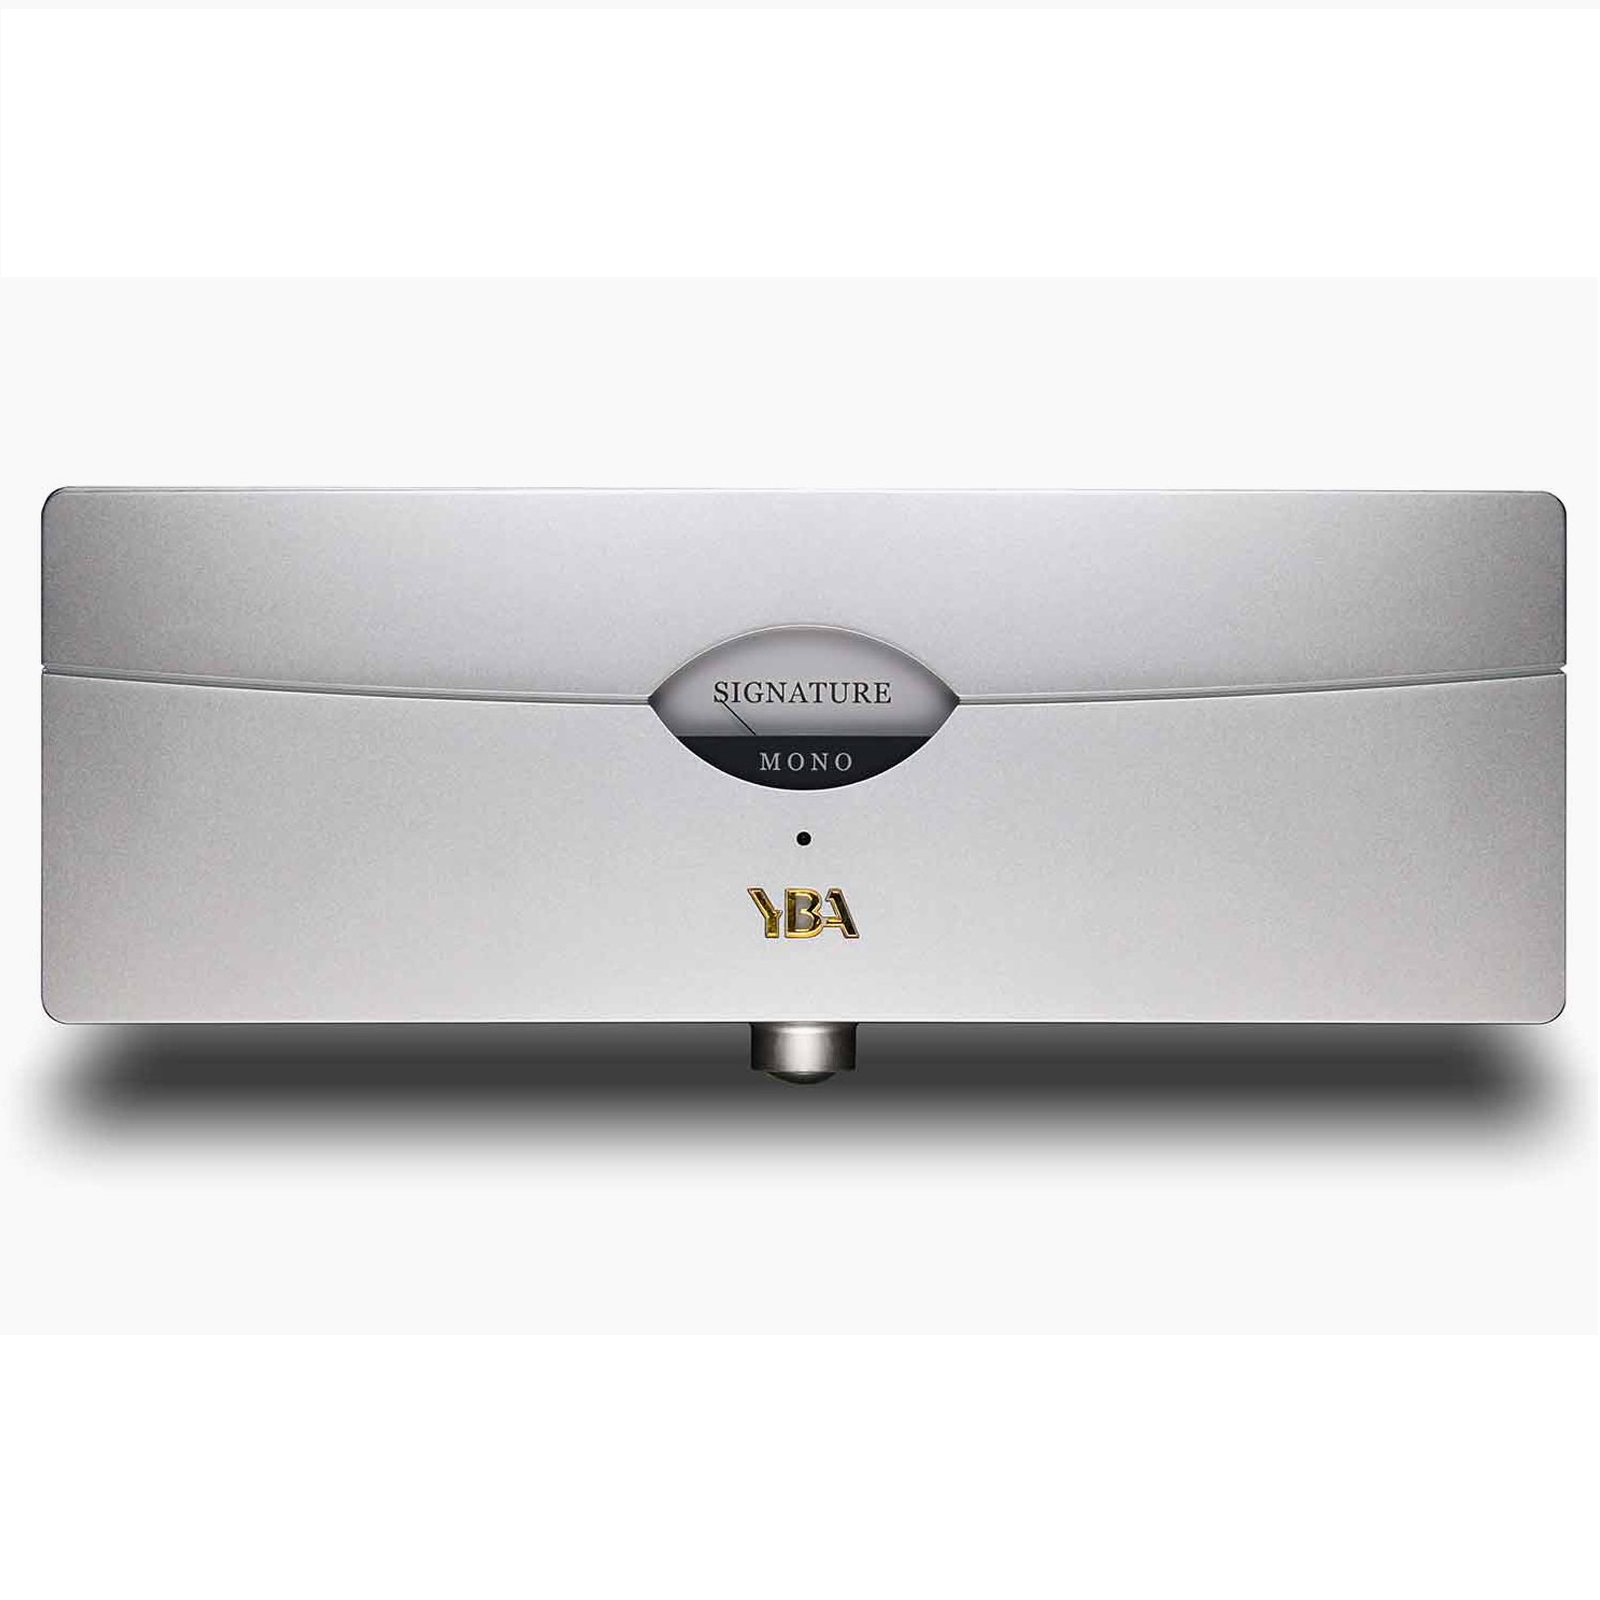 Усилители мощности YBA Signature Mono Power Amplifier усилители мощности ps audio bhk signature 300 mono silver